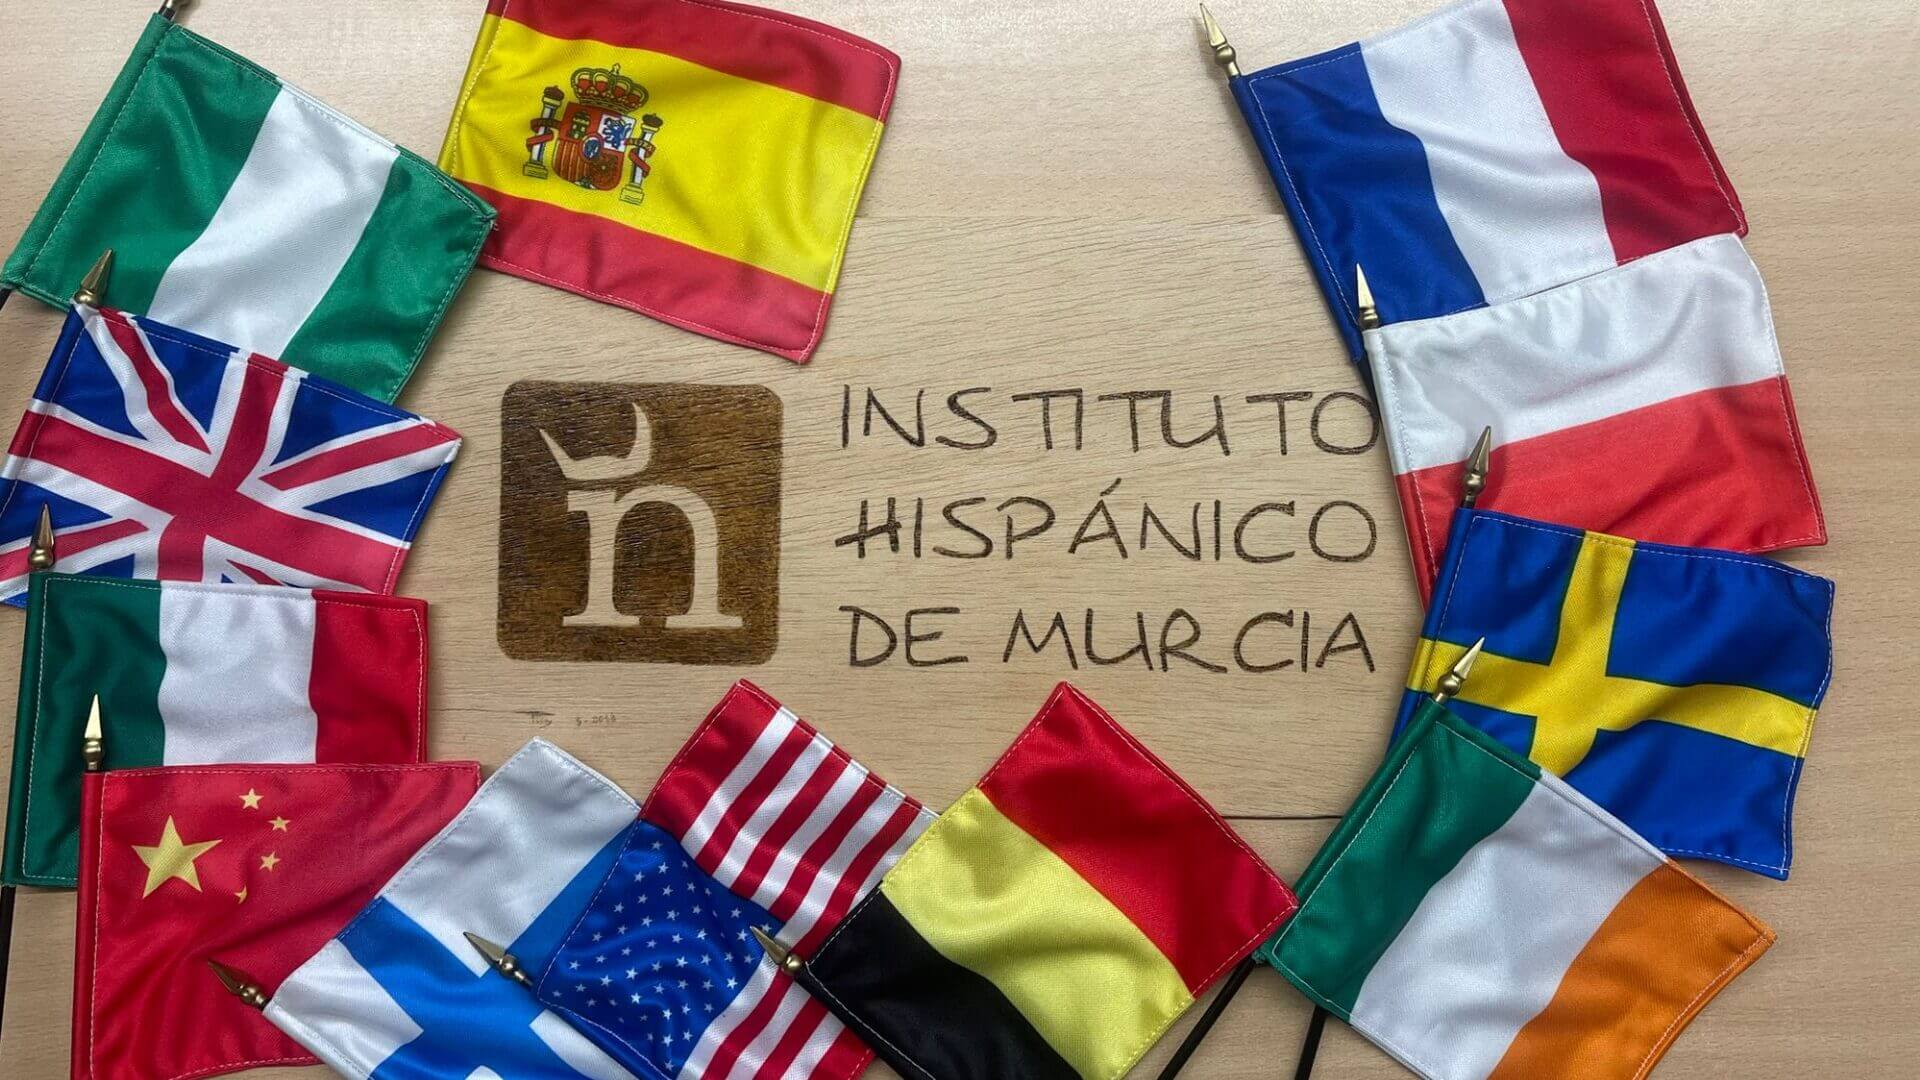 Instituto Hispánico de Murcia - NIE и гражданство: полное руководство по их получению